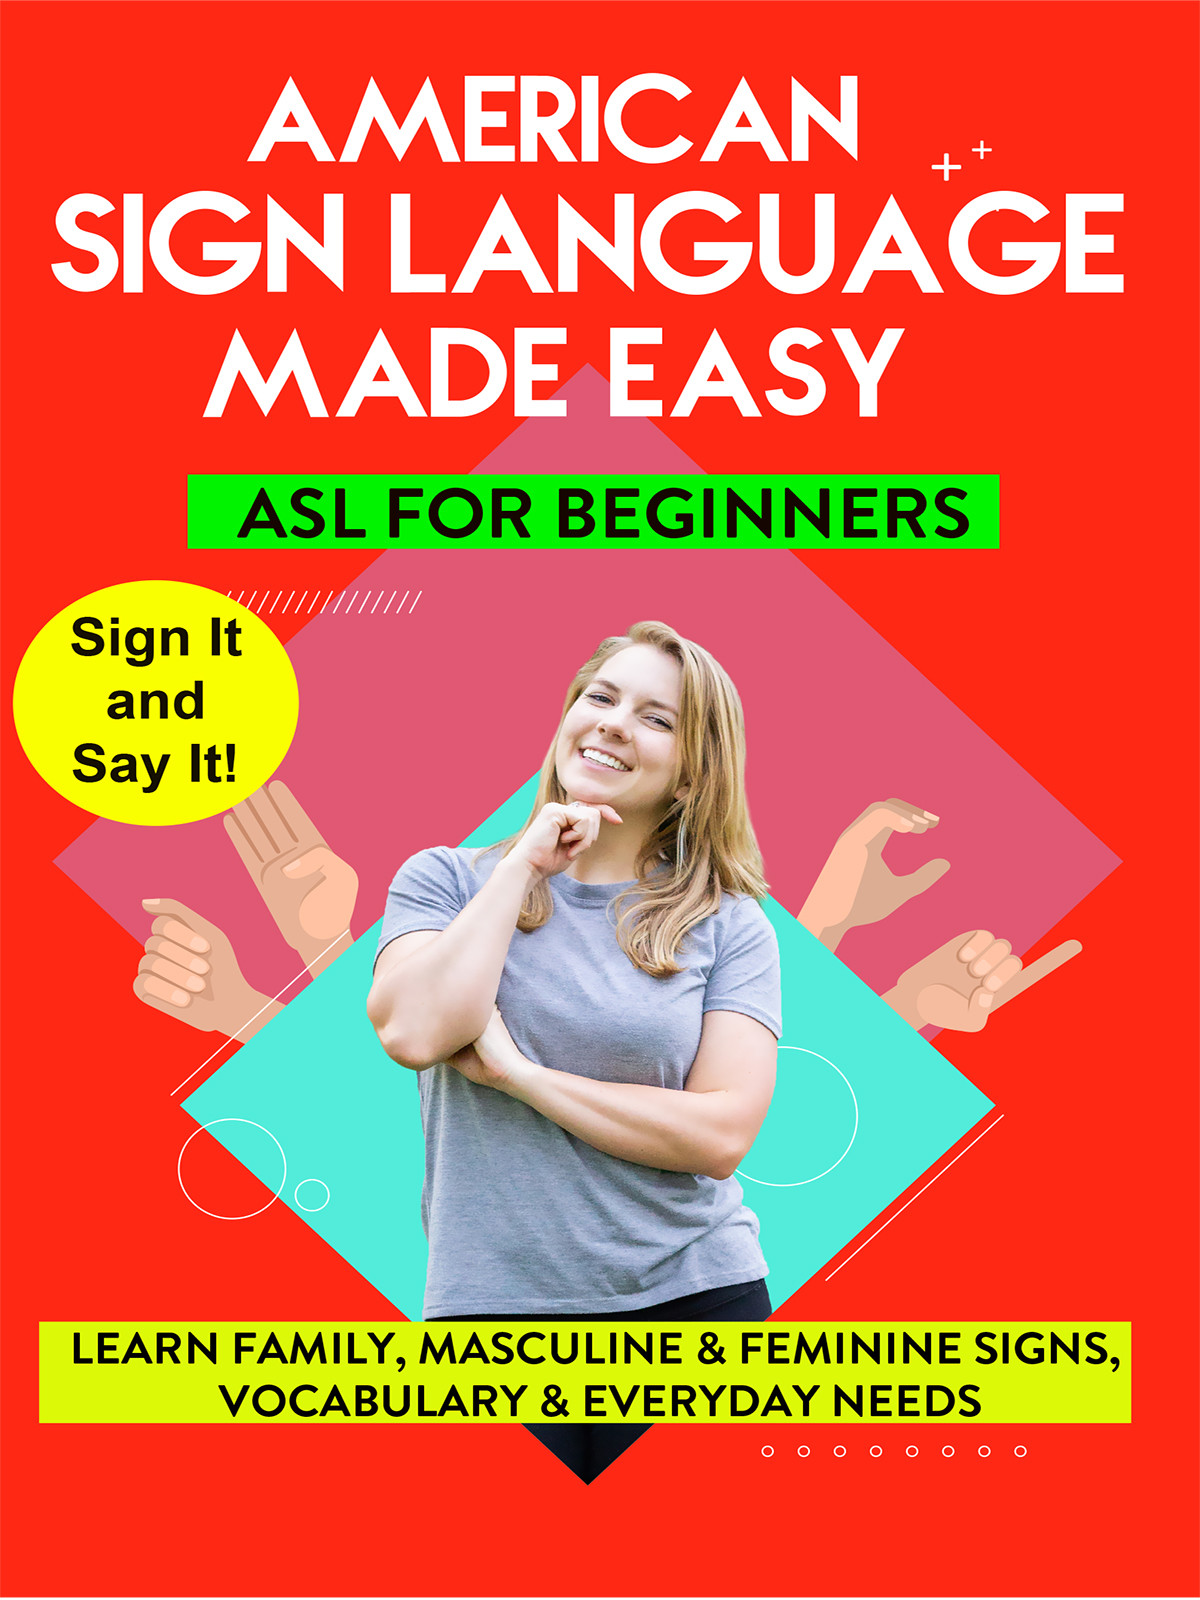 K9802 - ASL - Learn Family, Masculine & Feminine Signs, Vocabulary & Everyday Needs